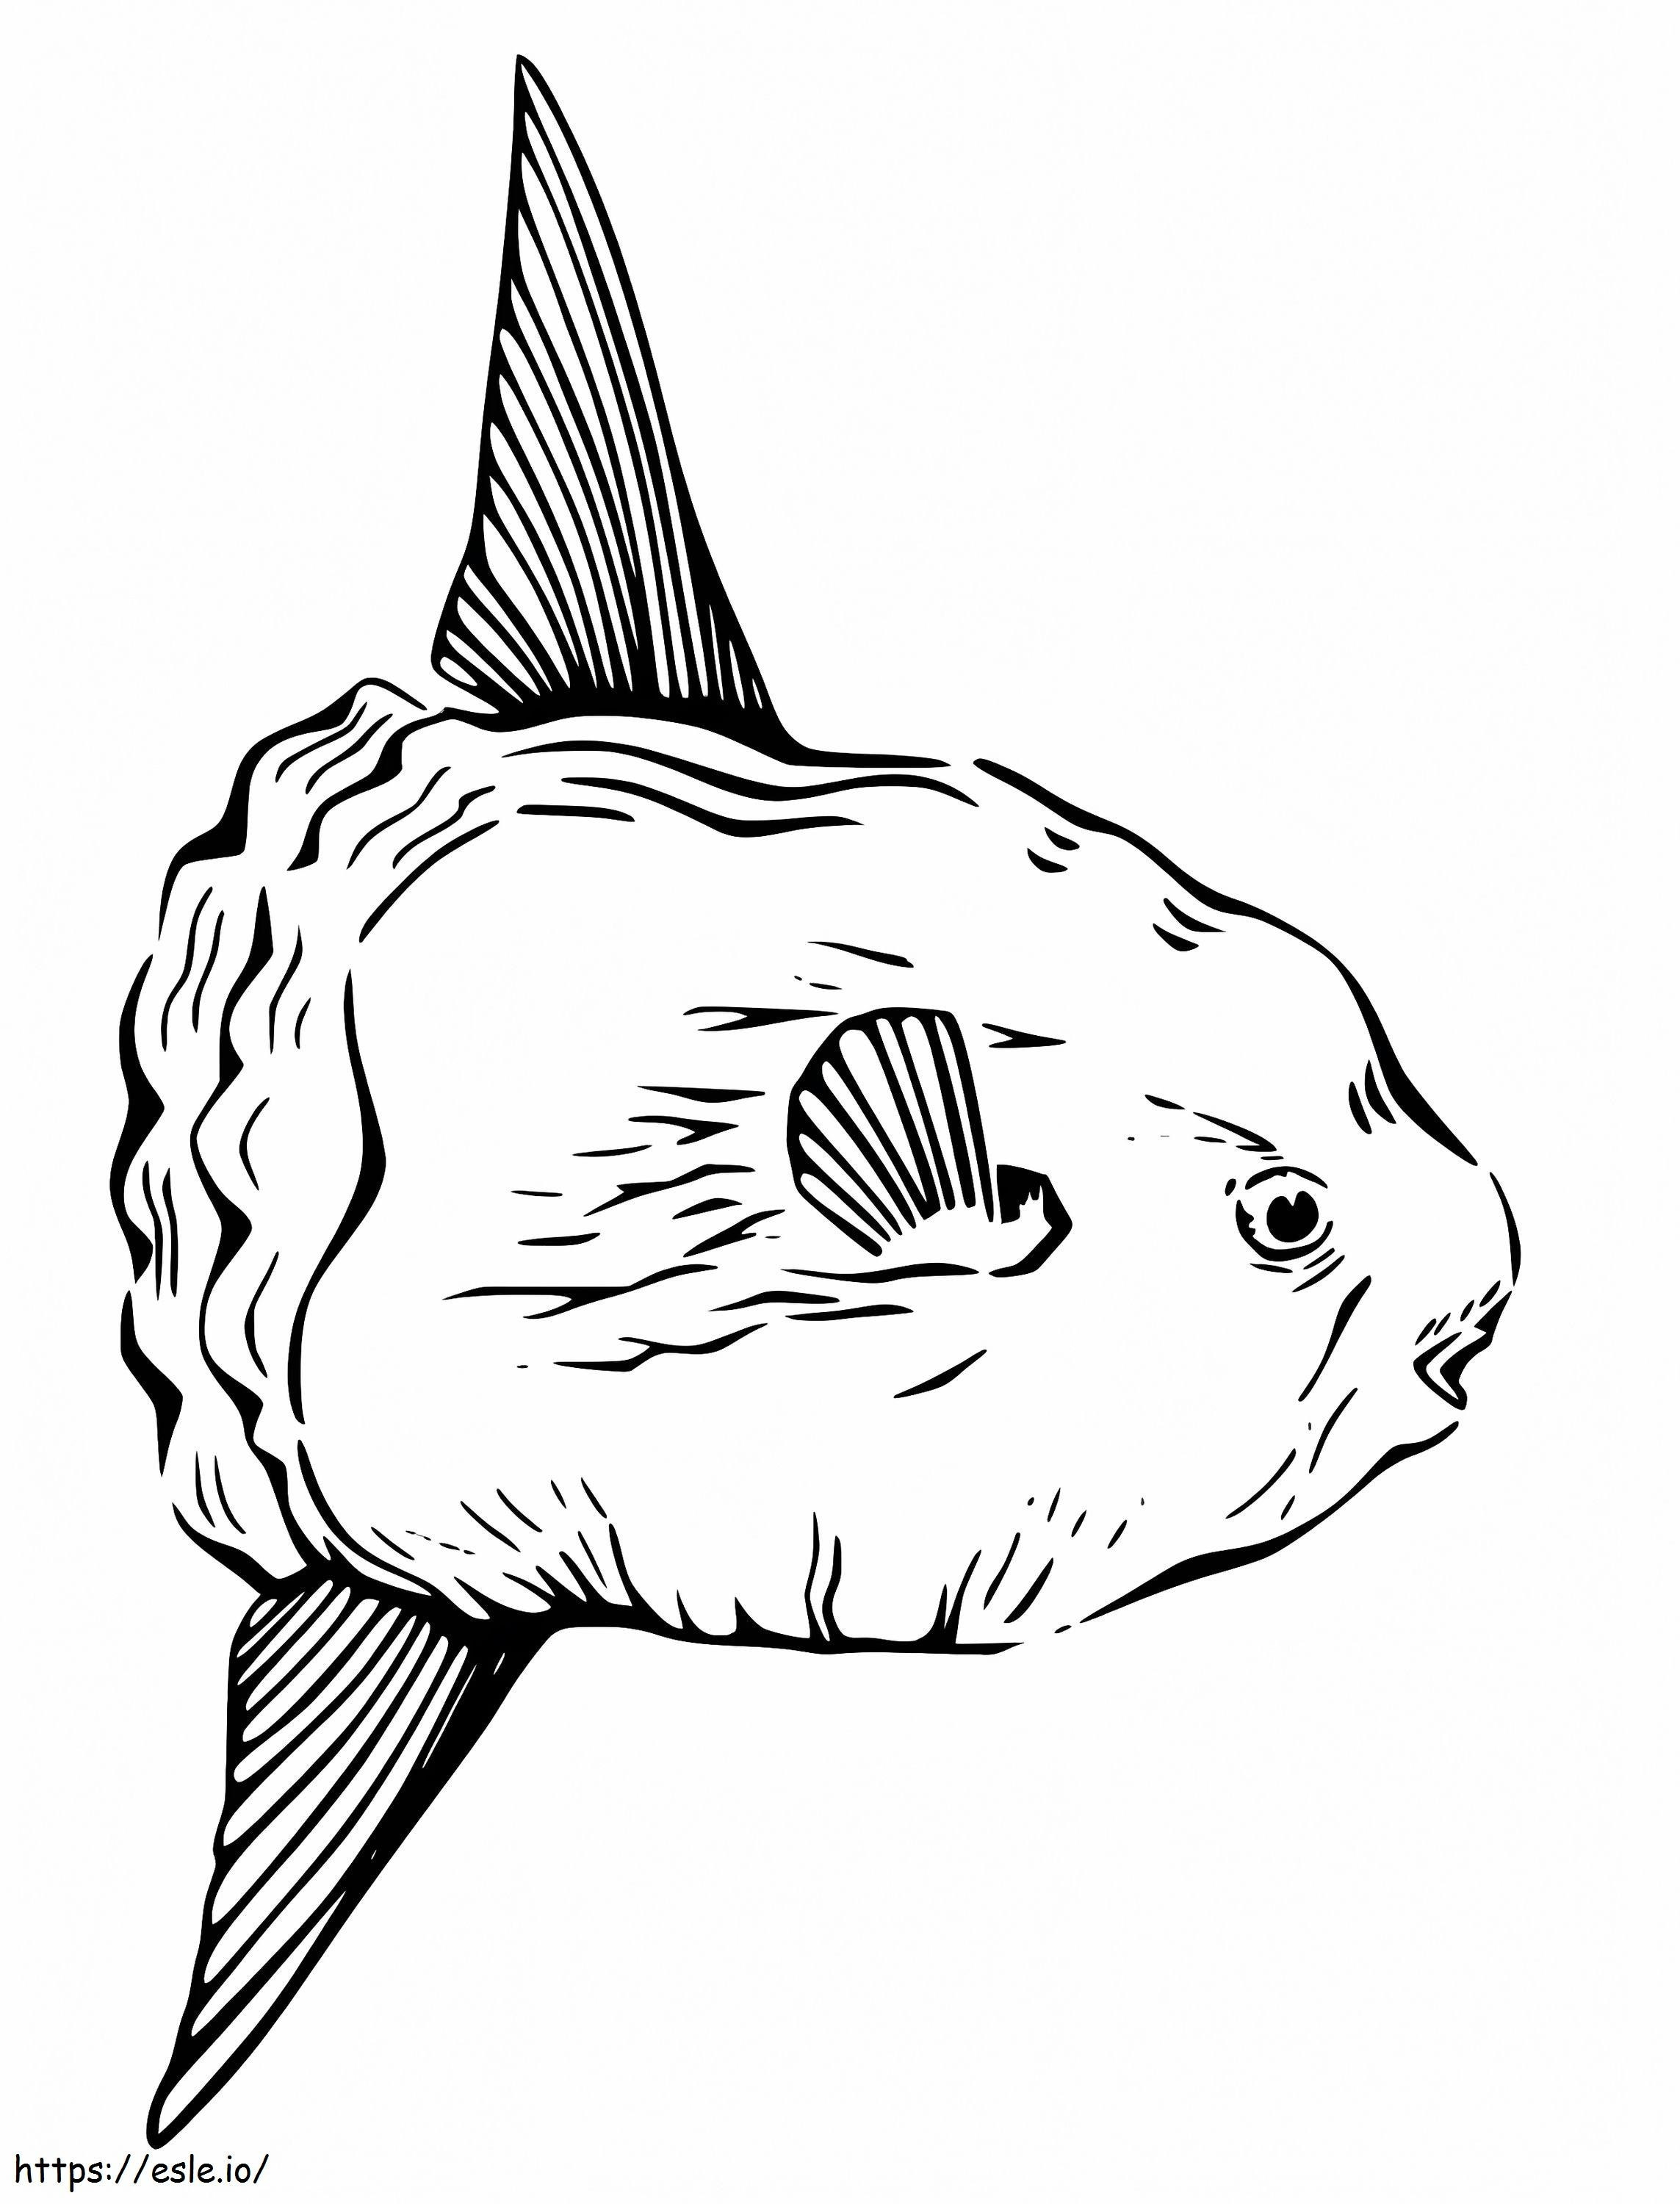 Printable Sunfish coloring page